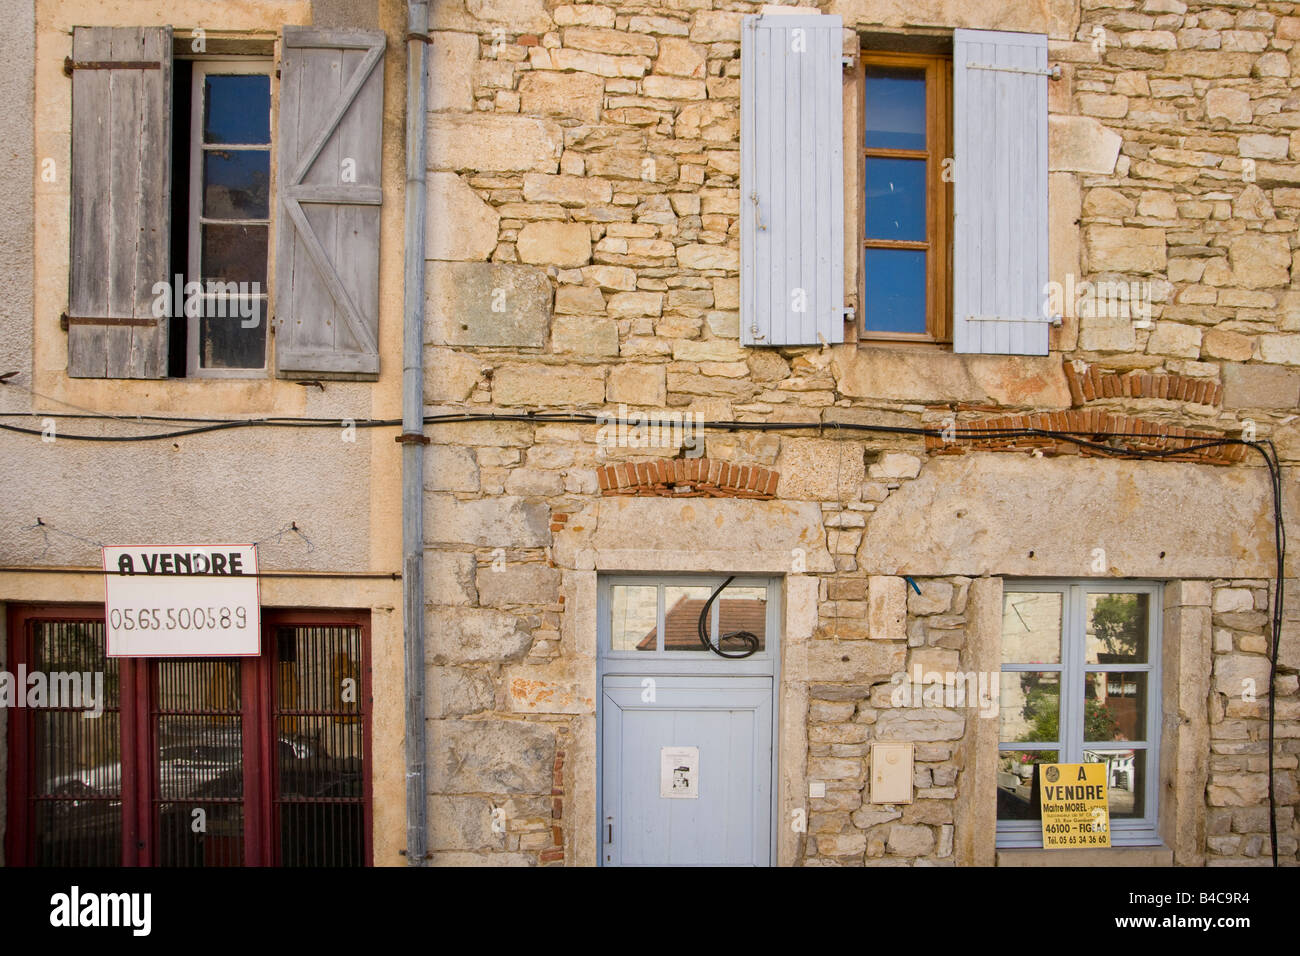 Village houses with estate agents for sale signs, Marcilhac sur Cele, 46, Lot, Quercy, France, Europe Stock Photo